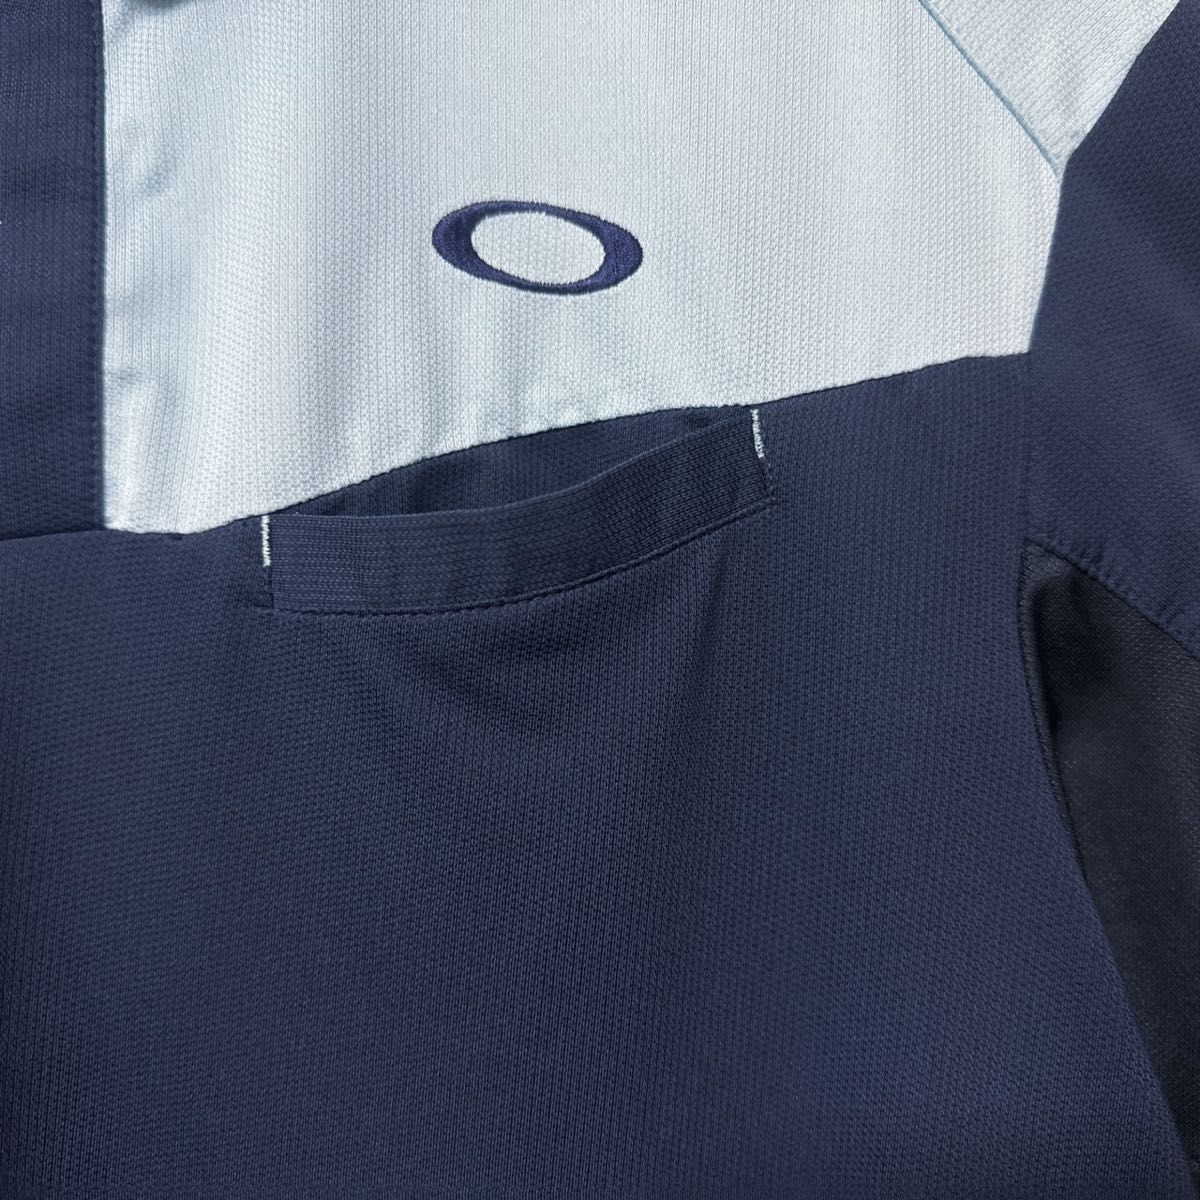 OAKLEY オークリー 人気 デザイン 半袖 ポロシャツ  ゴルフ ウェア スポーツ メンズ シャツ